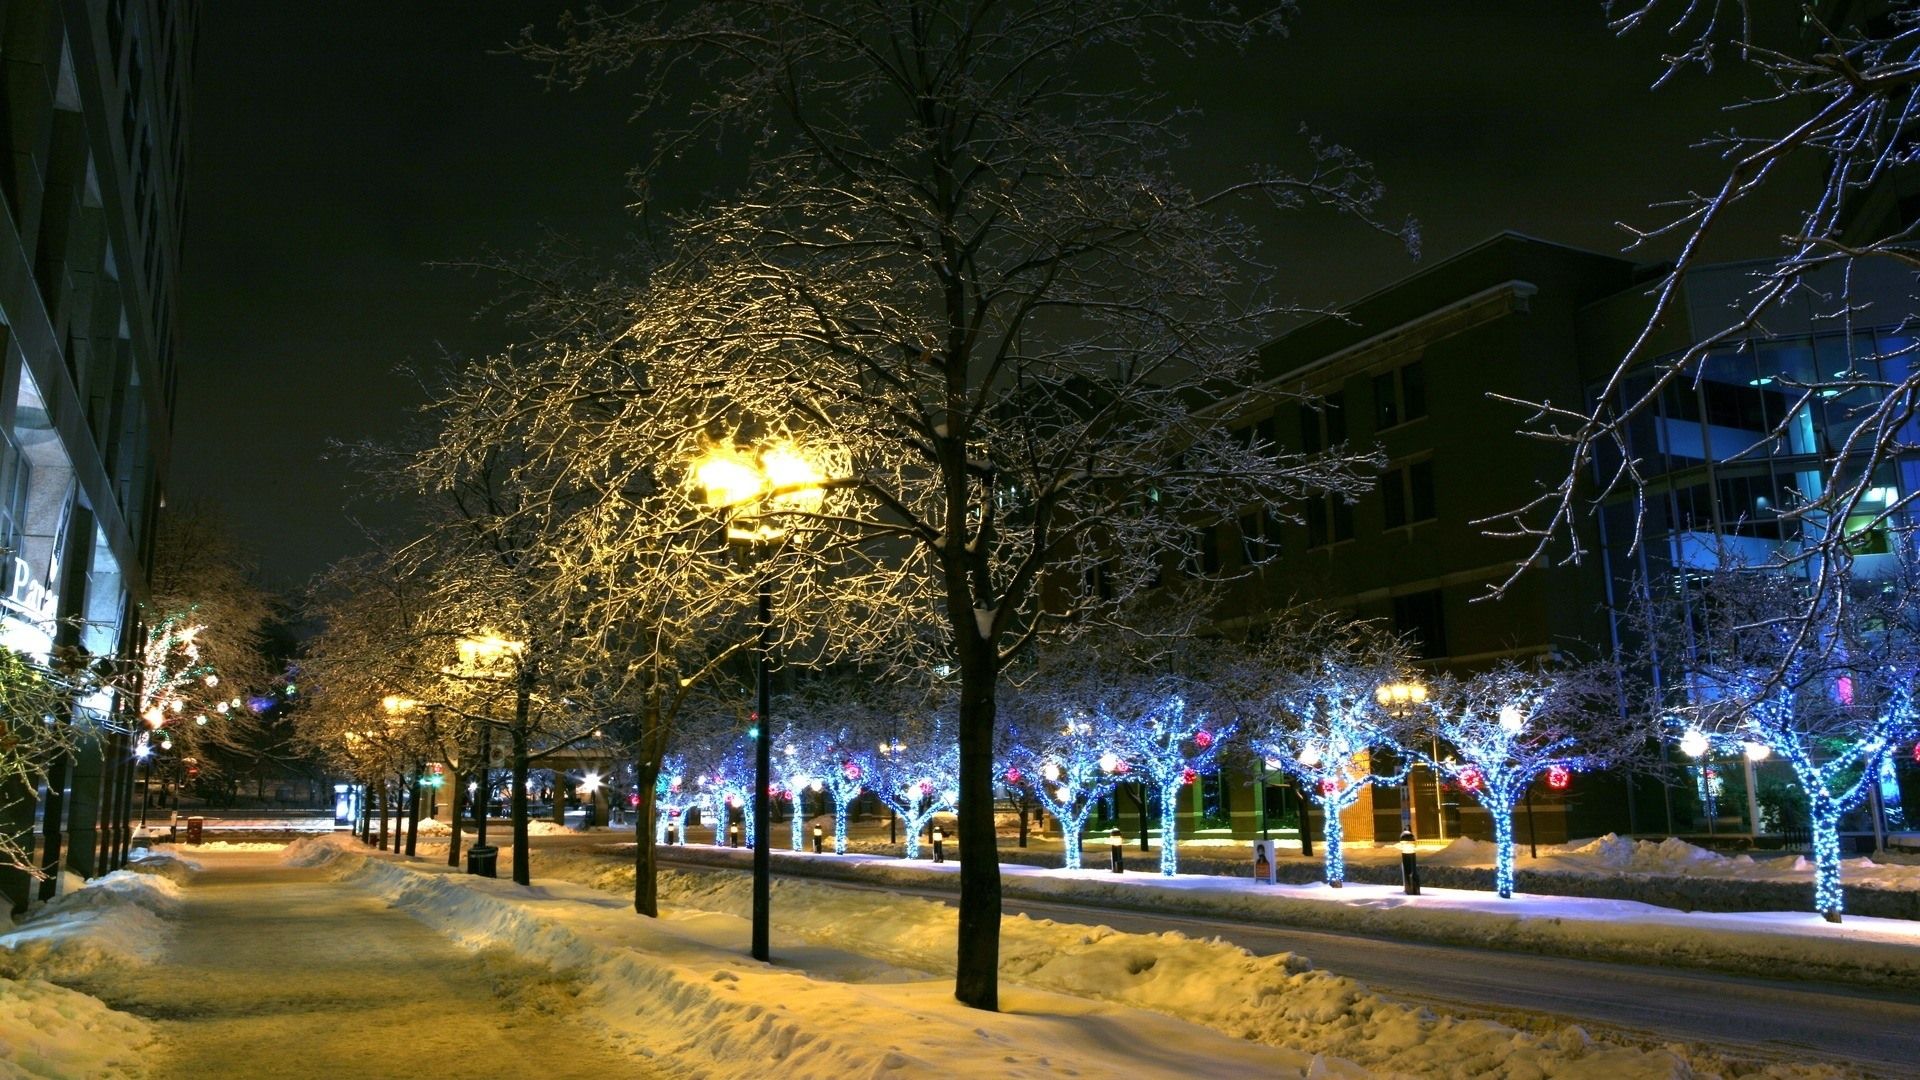 Wallpaper Winter, trees, snow, lights, city, street 1920x1080 Full HD 2K Picture, Image